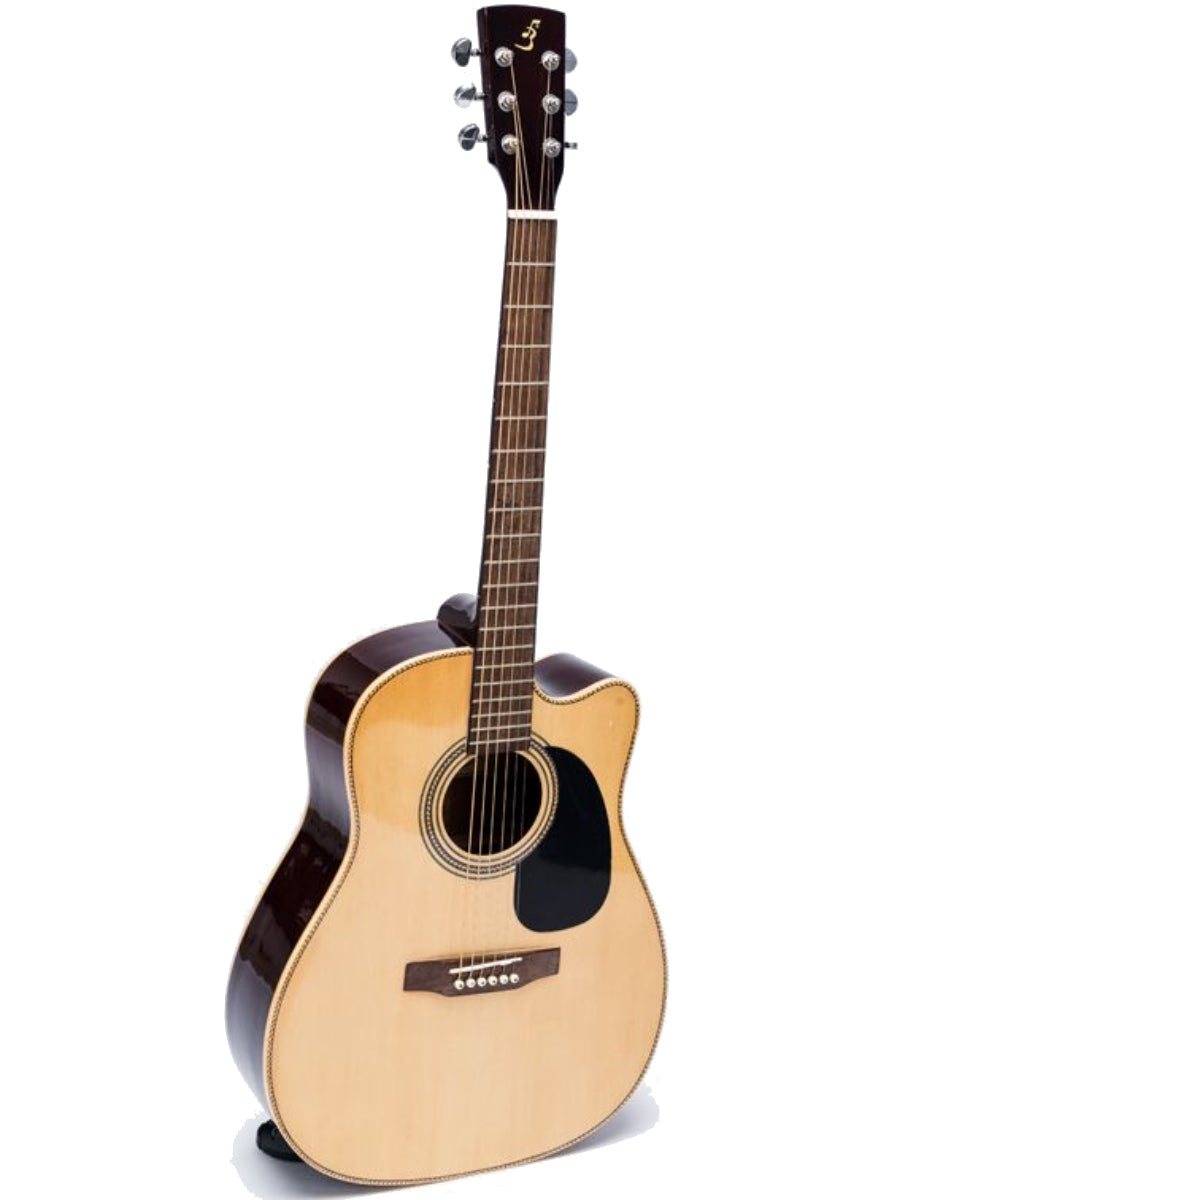 Đàn Guitar Acoustic Ba Đờn J150D